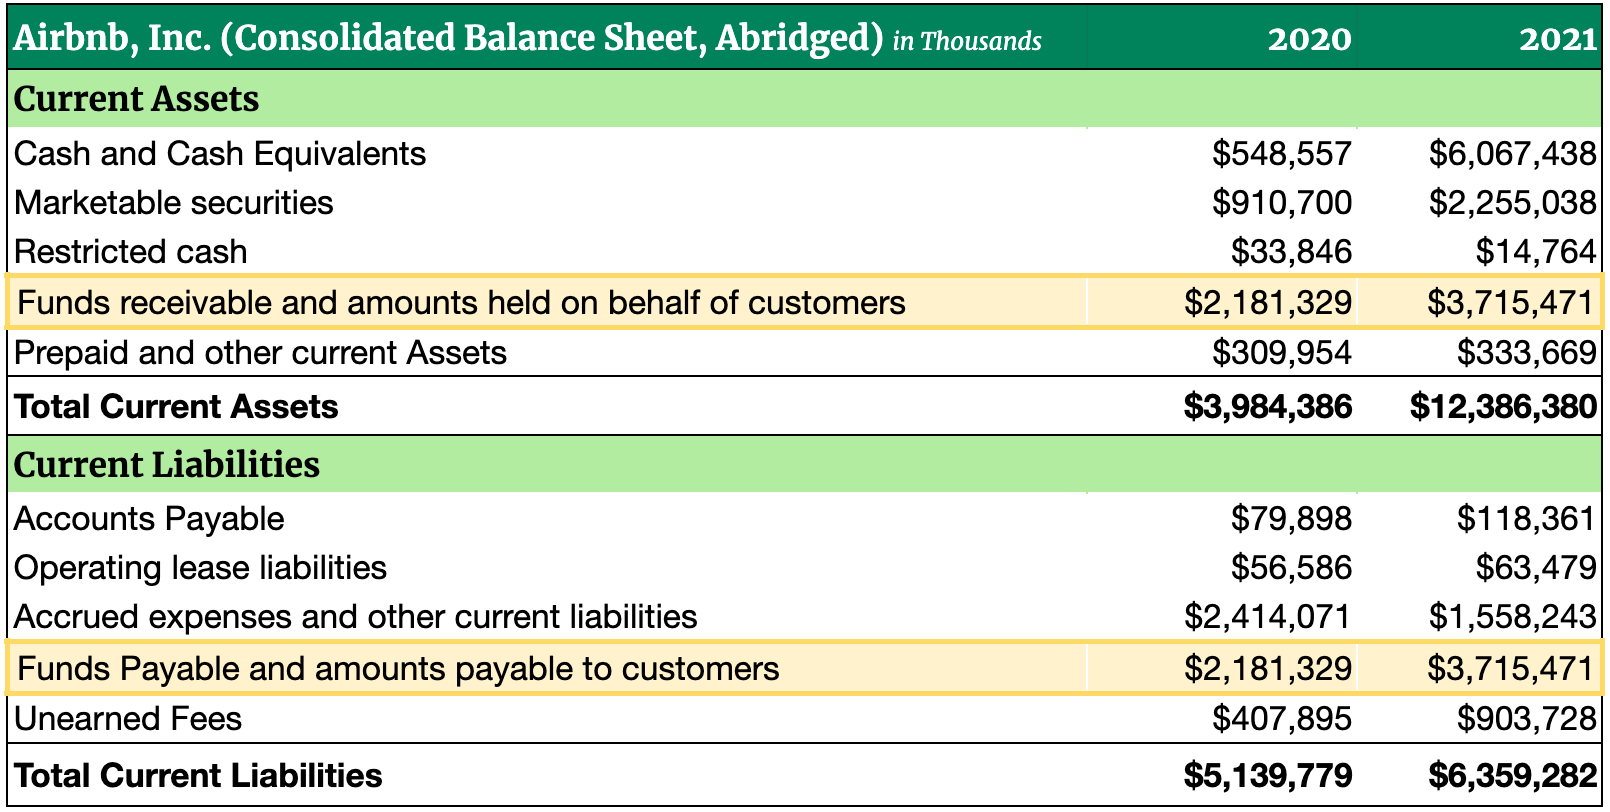 Image of Airbnb's balance sheet